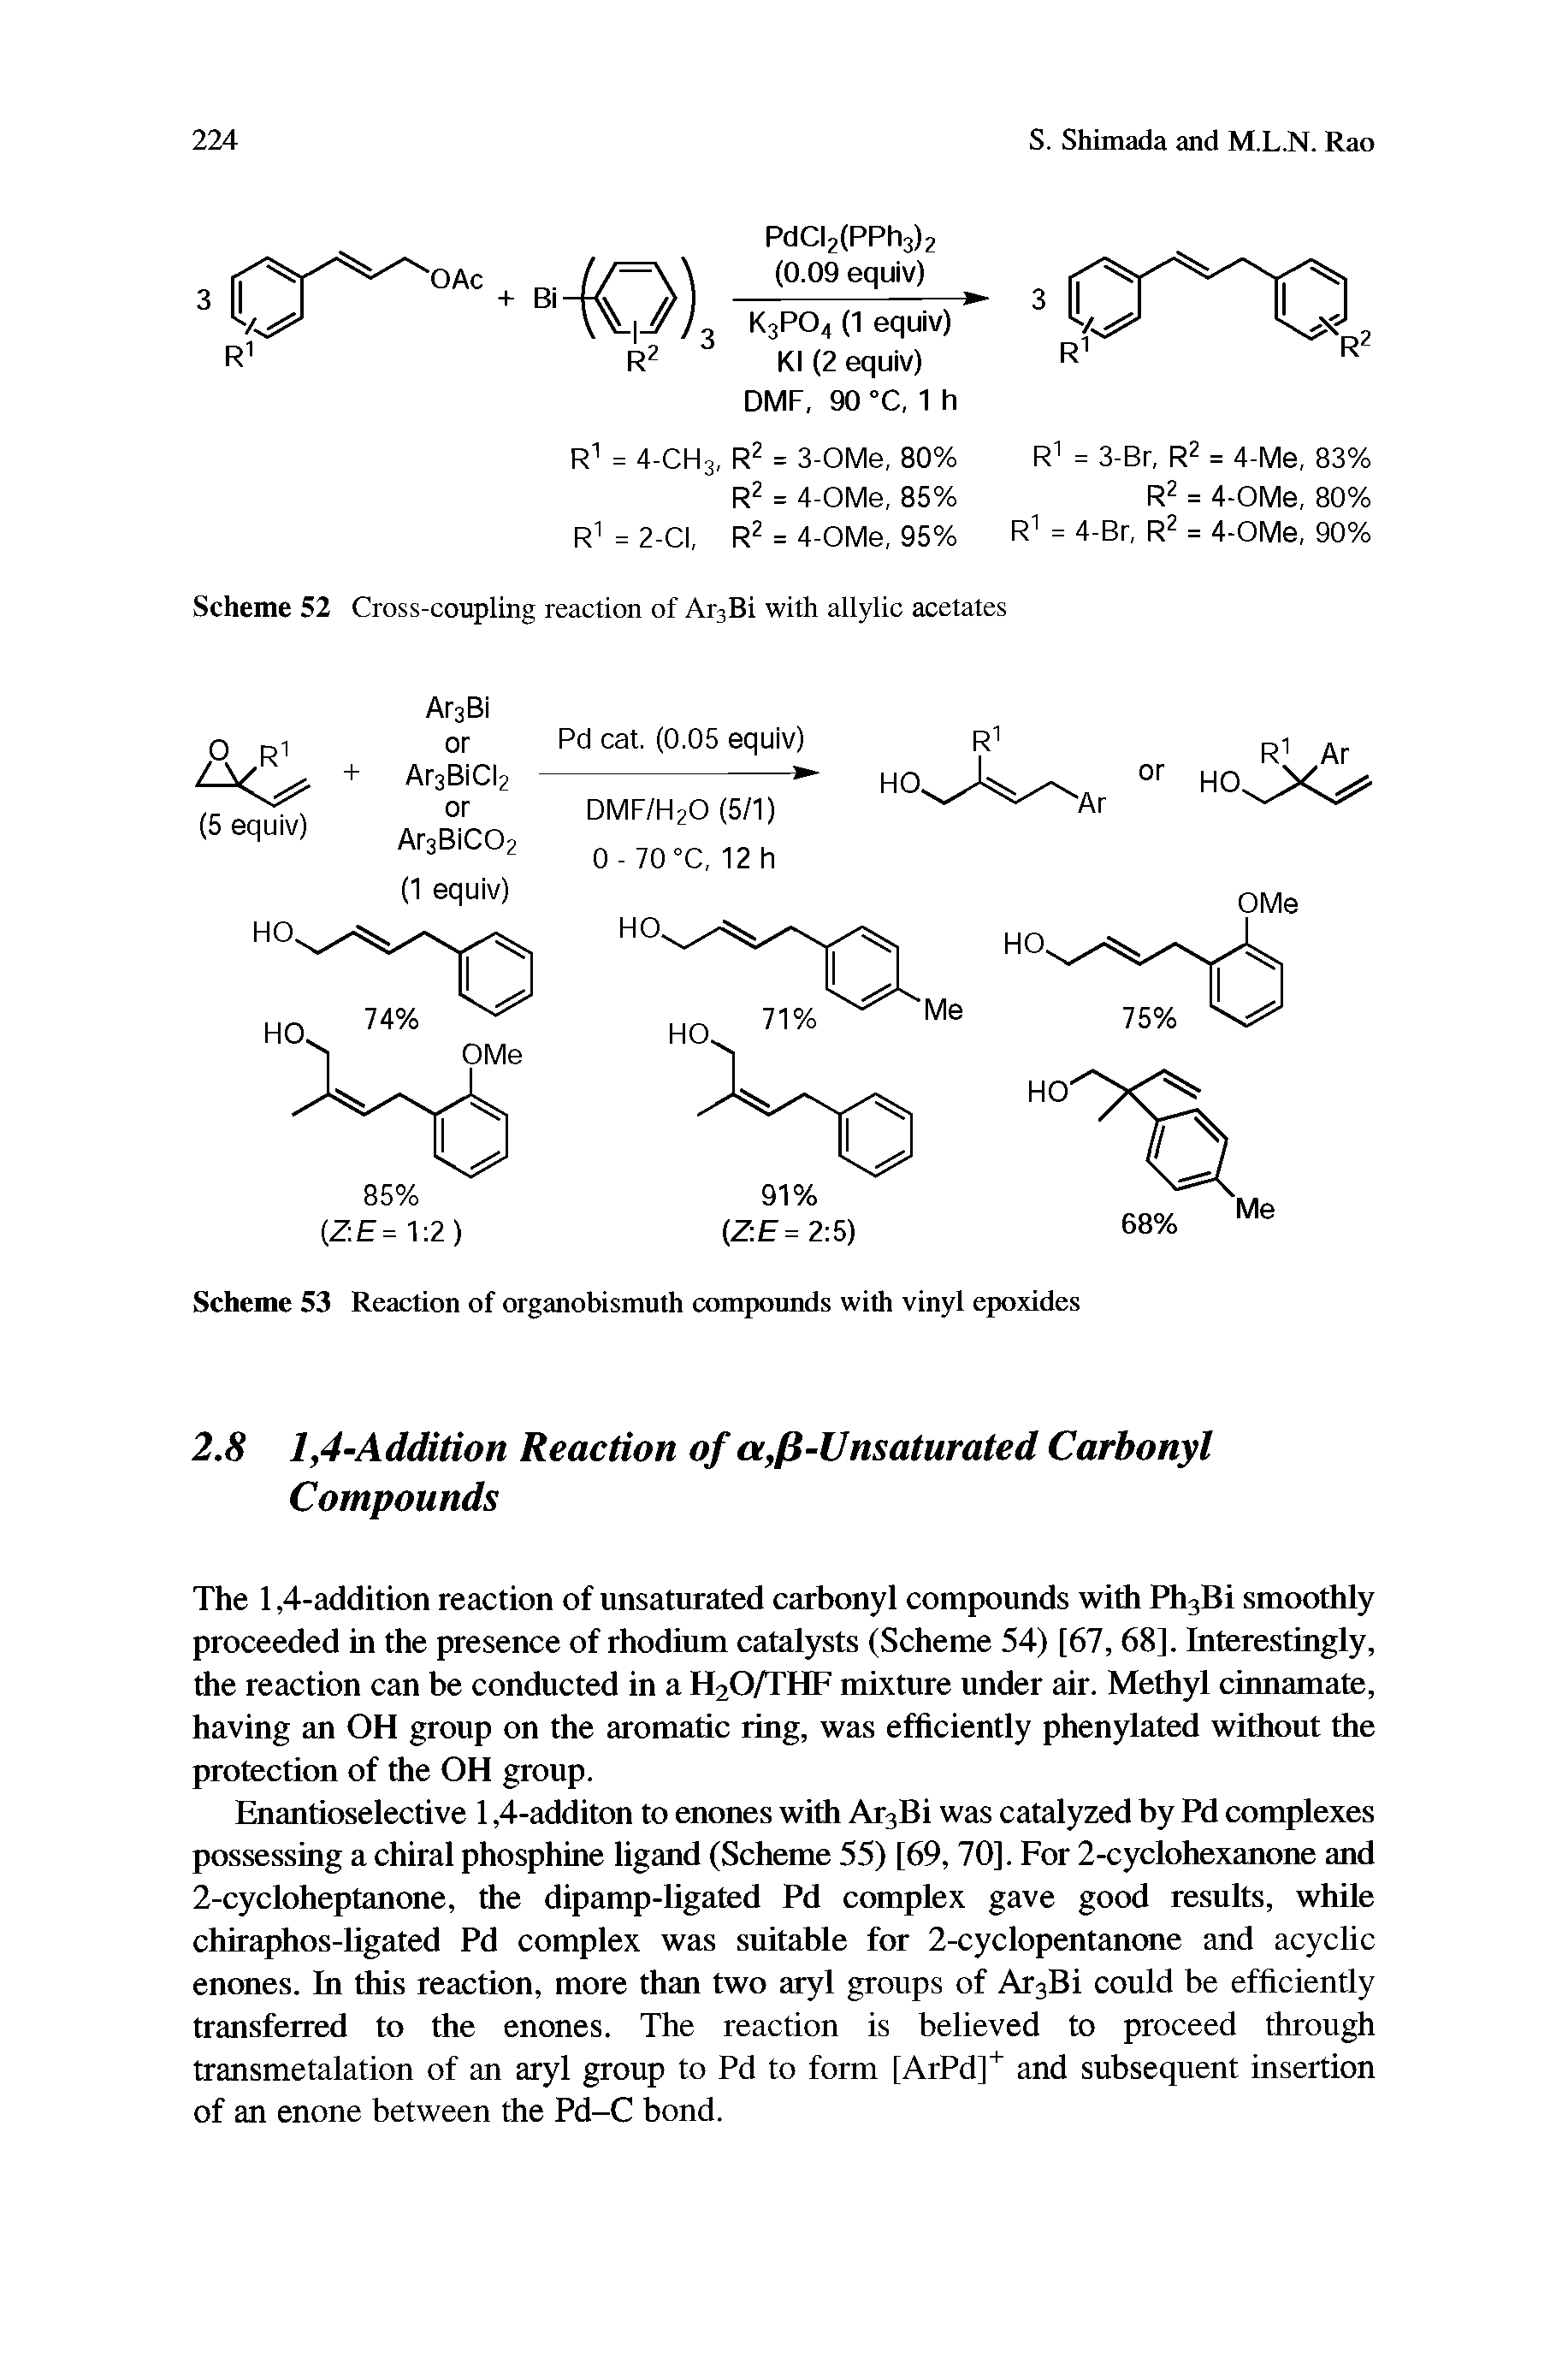 Scheme 53 Reaction of organobismuth compounds with vinyl epoxides...